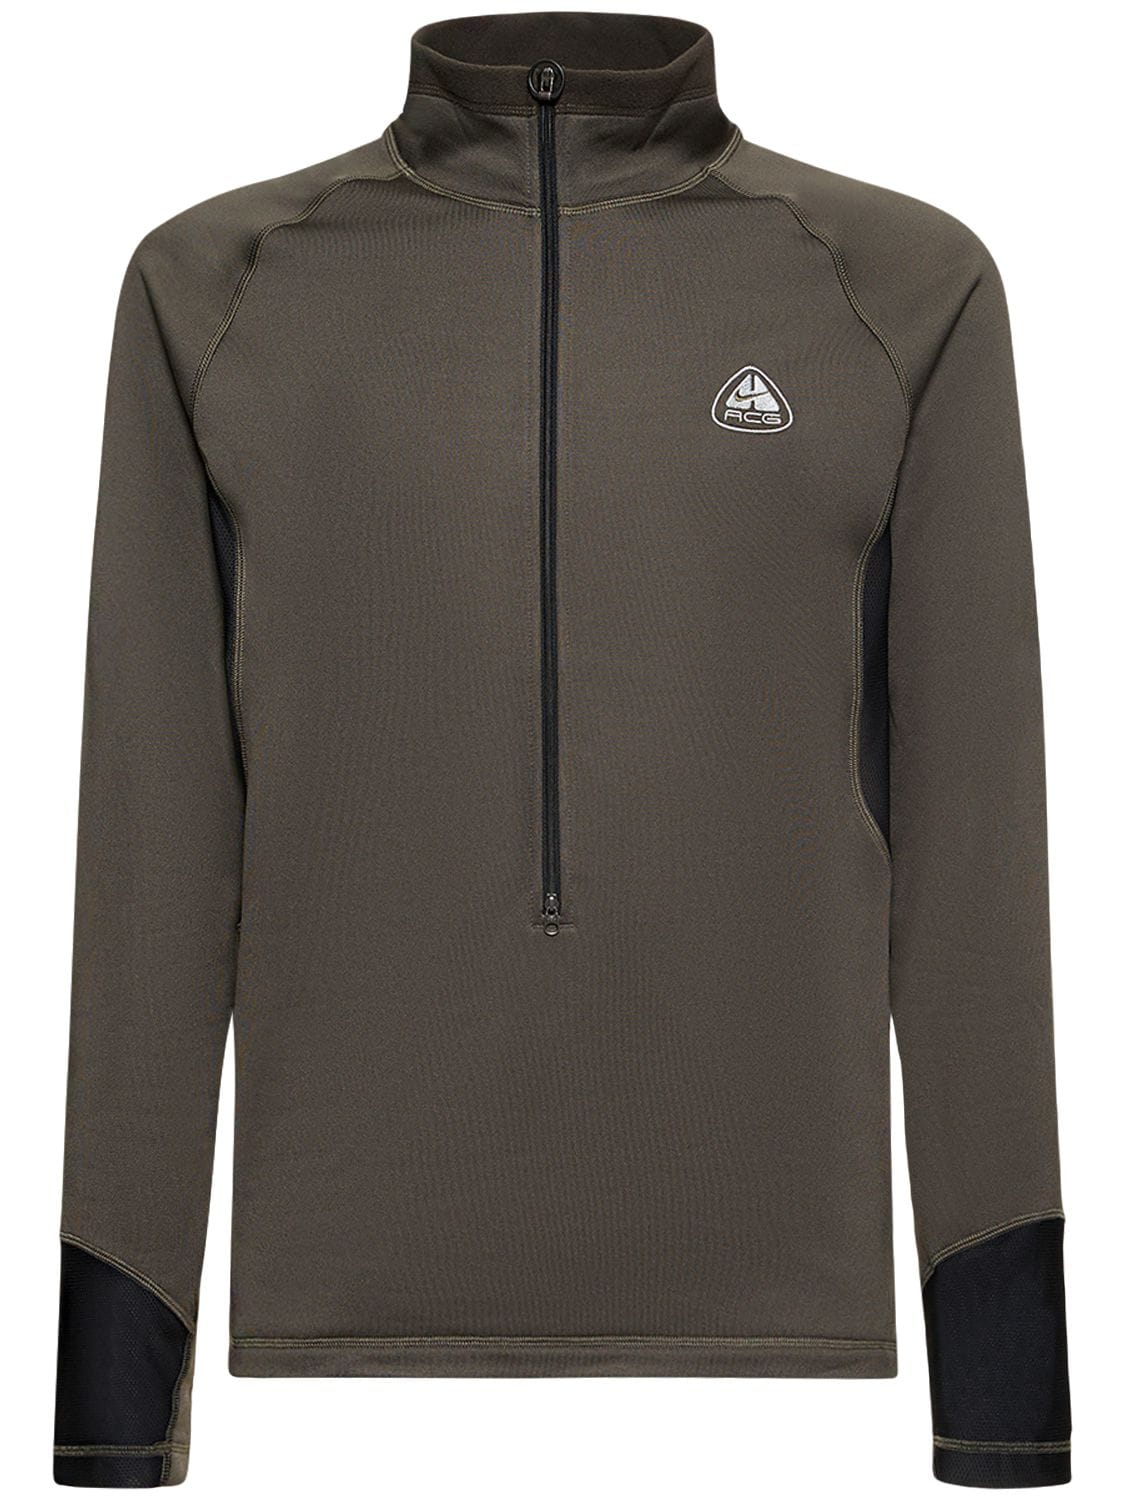 Acg Oregona Polartec Sweatshirt – MEN > CLOTHING > SWEATSHIRTS